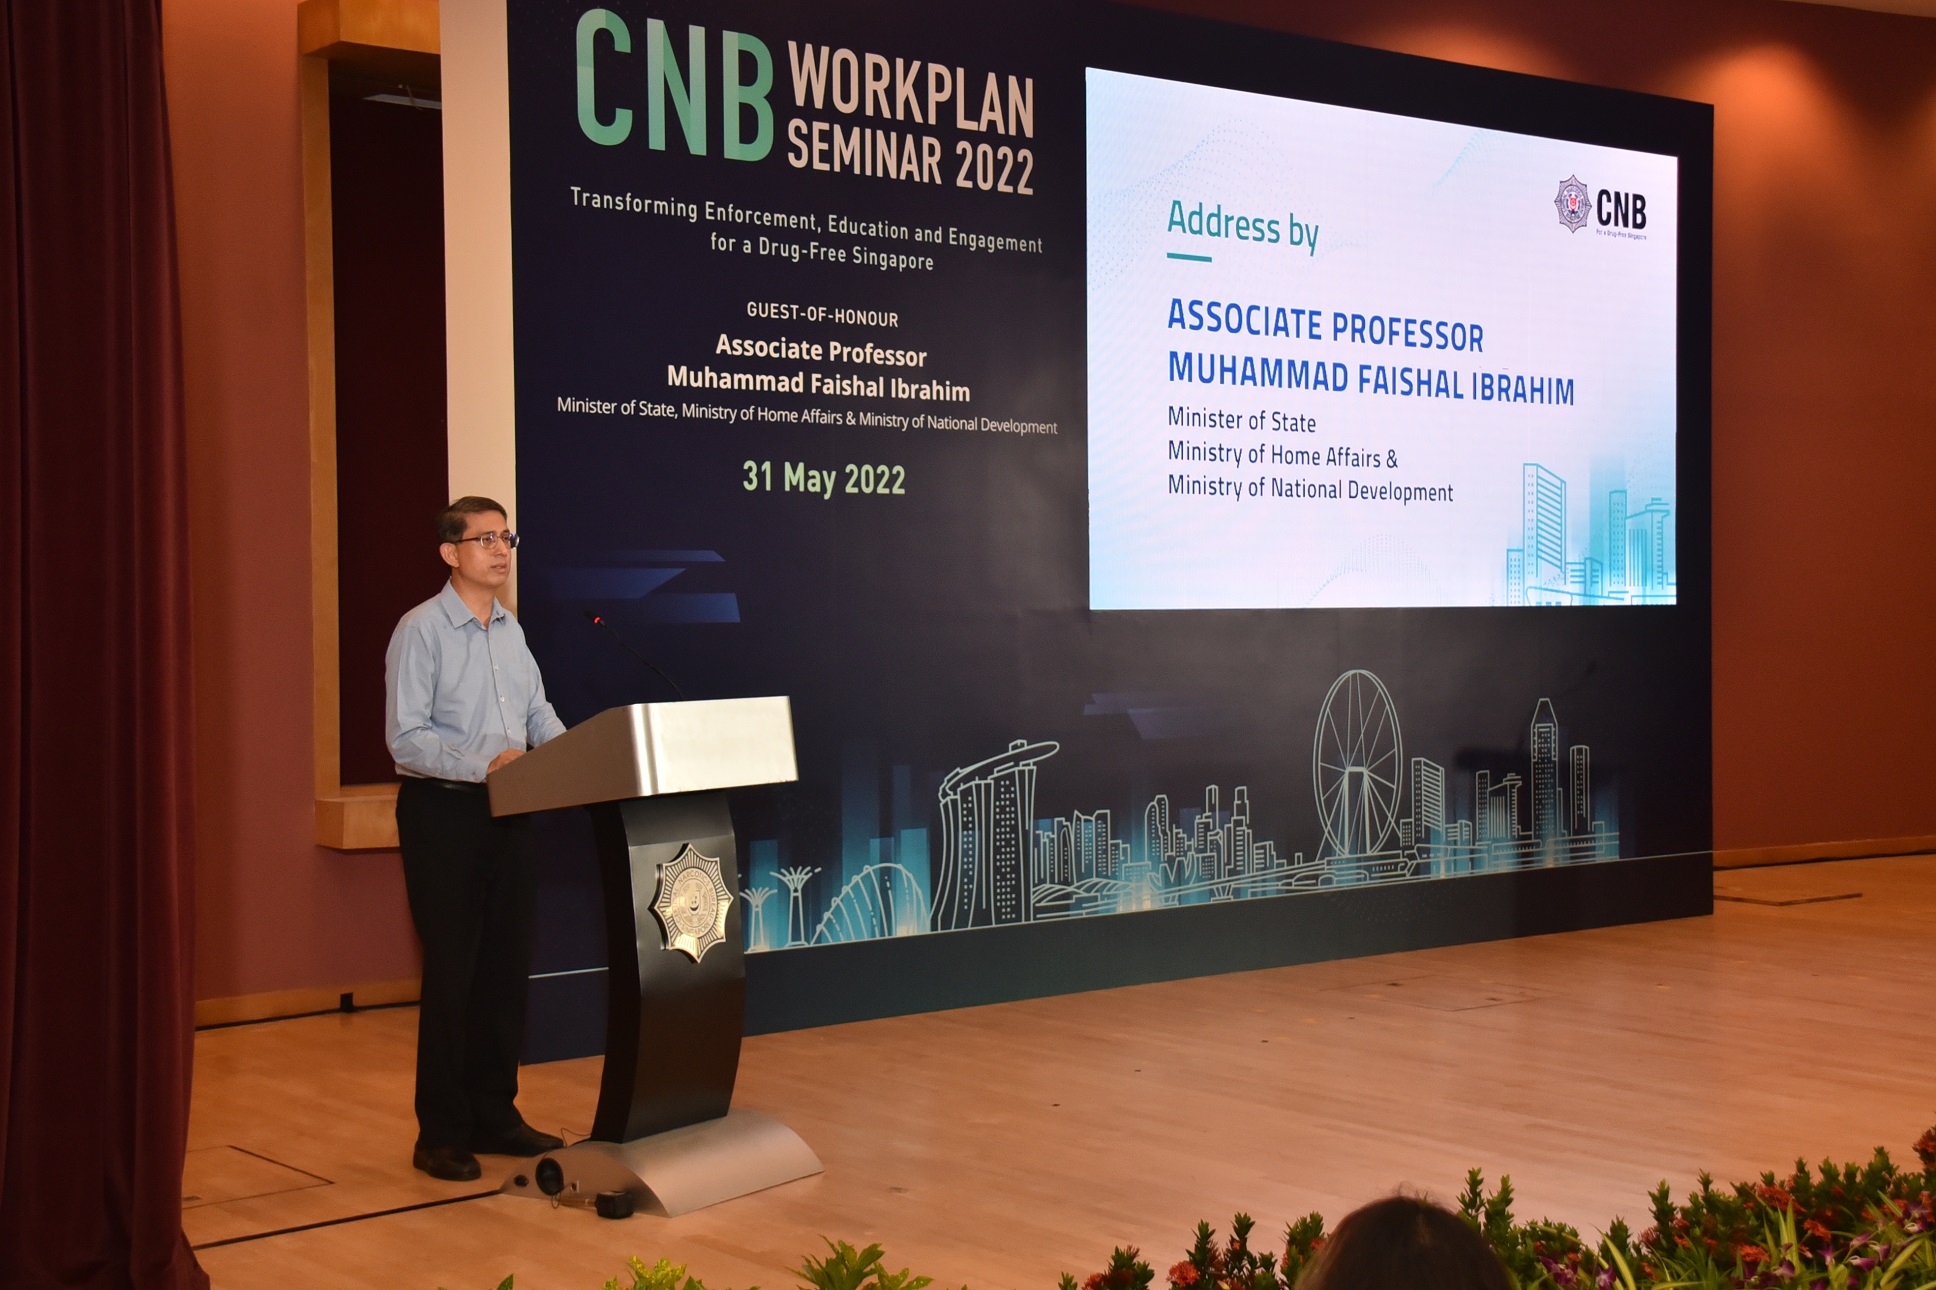 CNB Workplan Seminar 2022